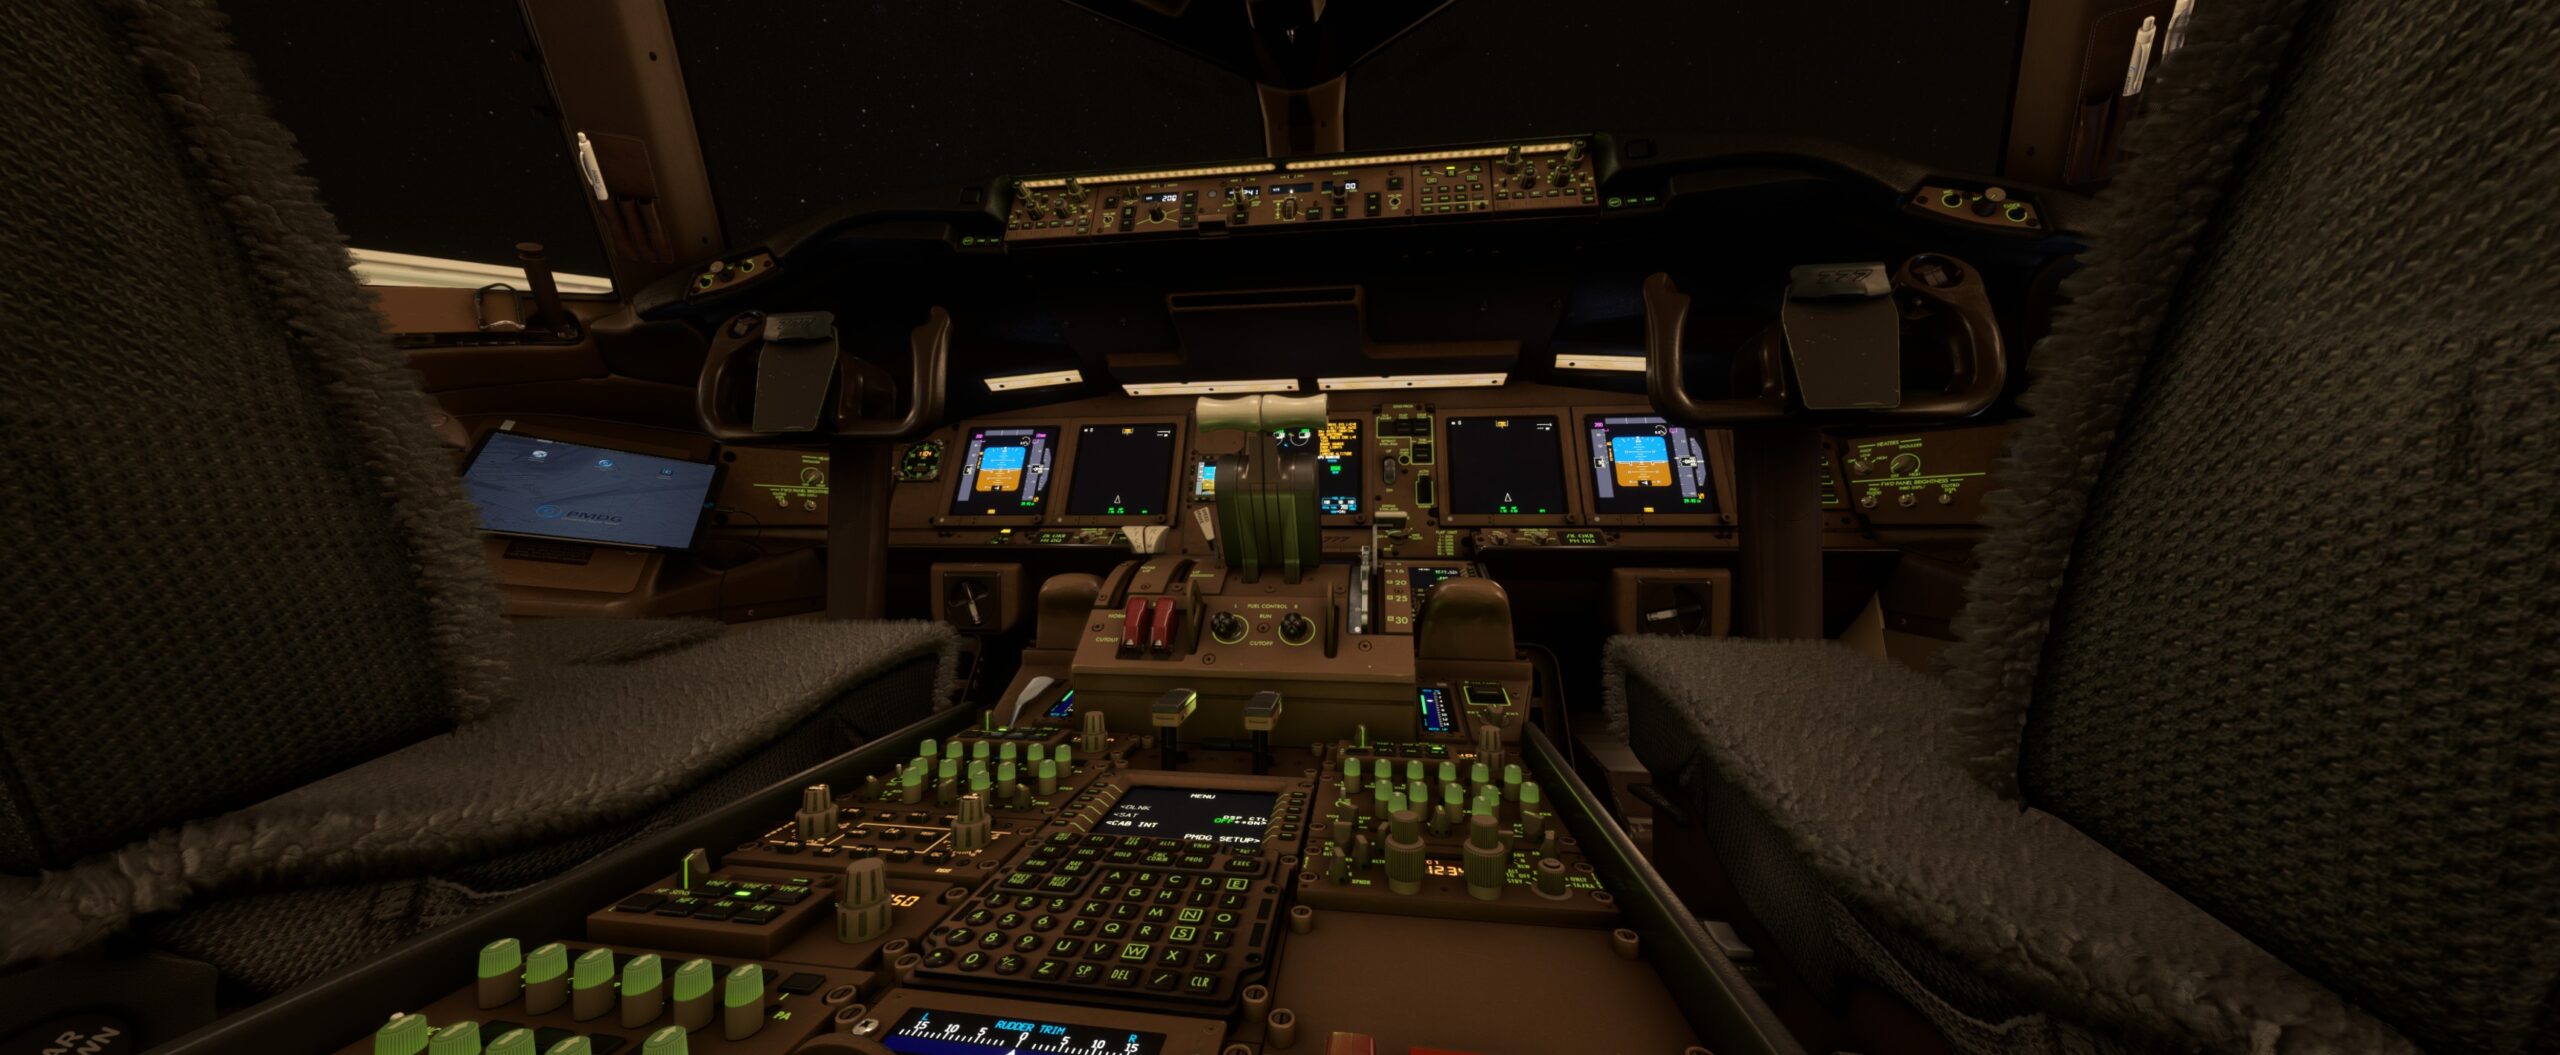 PMDG MSFS 777 Flight Deck